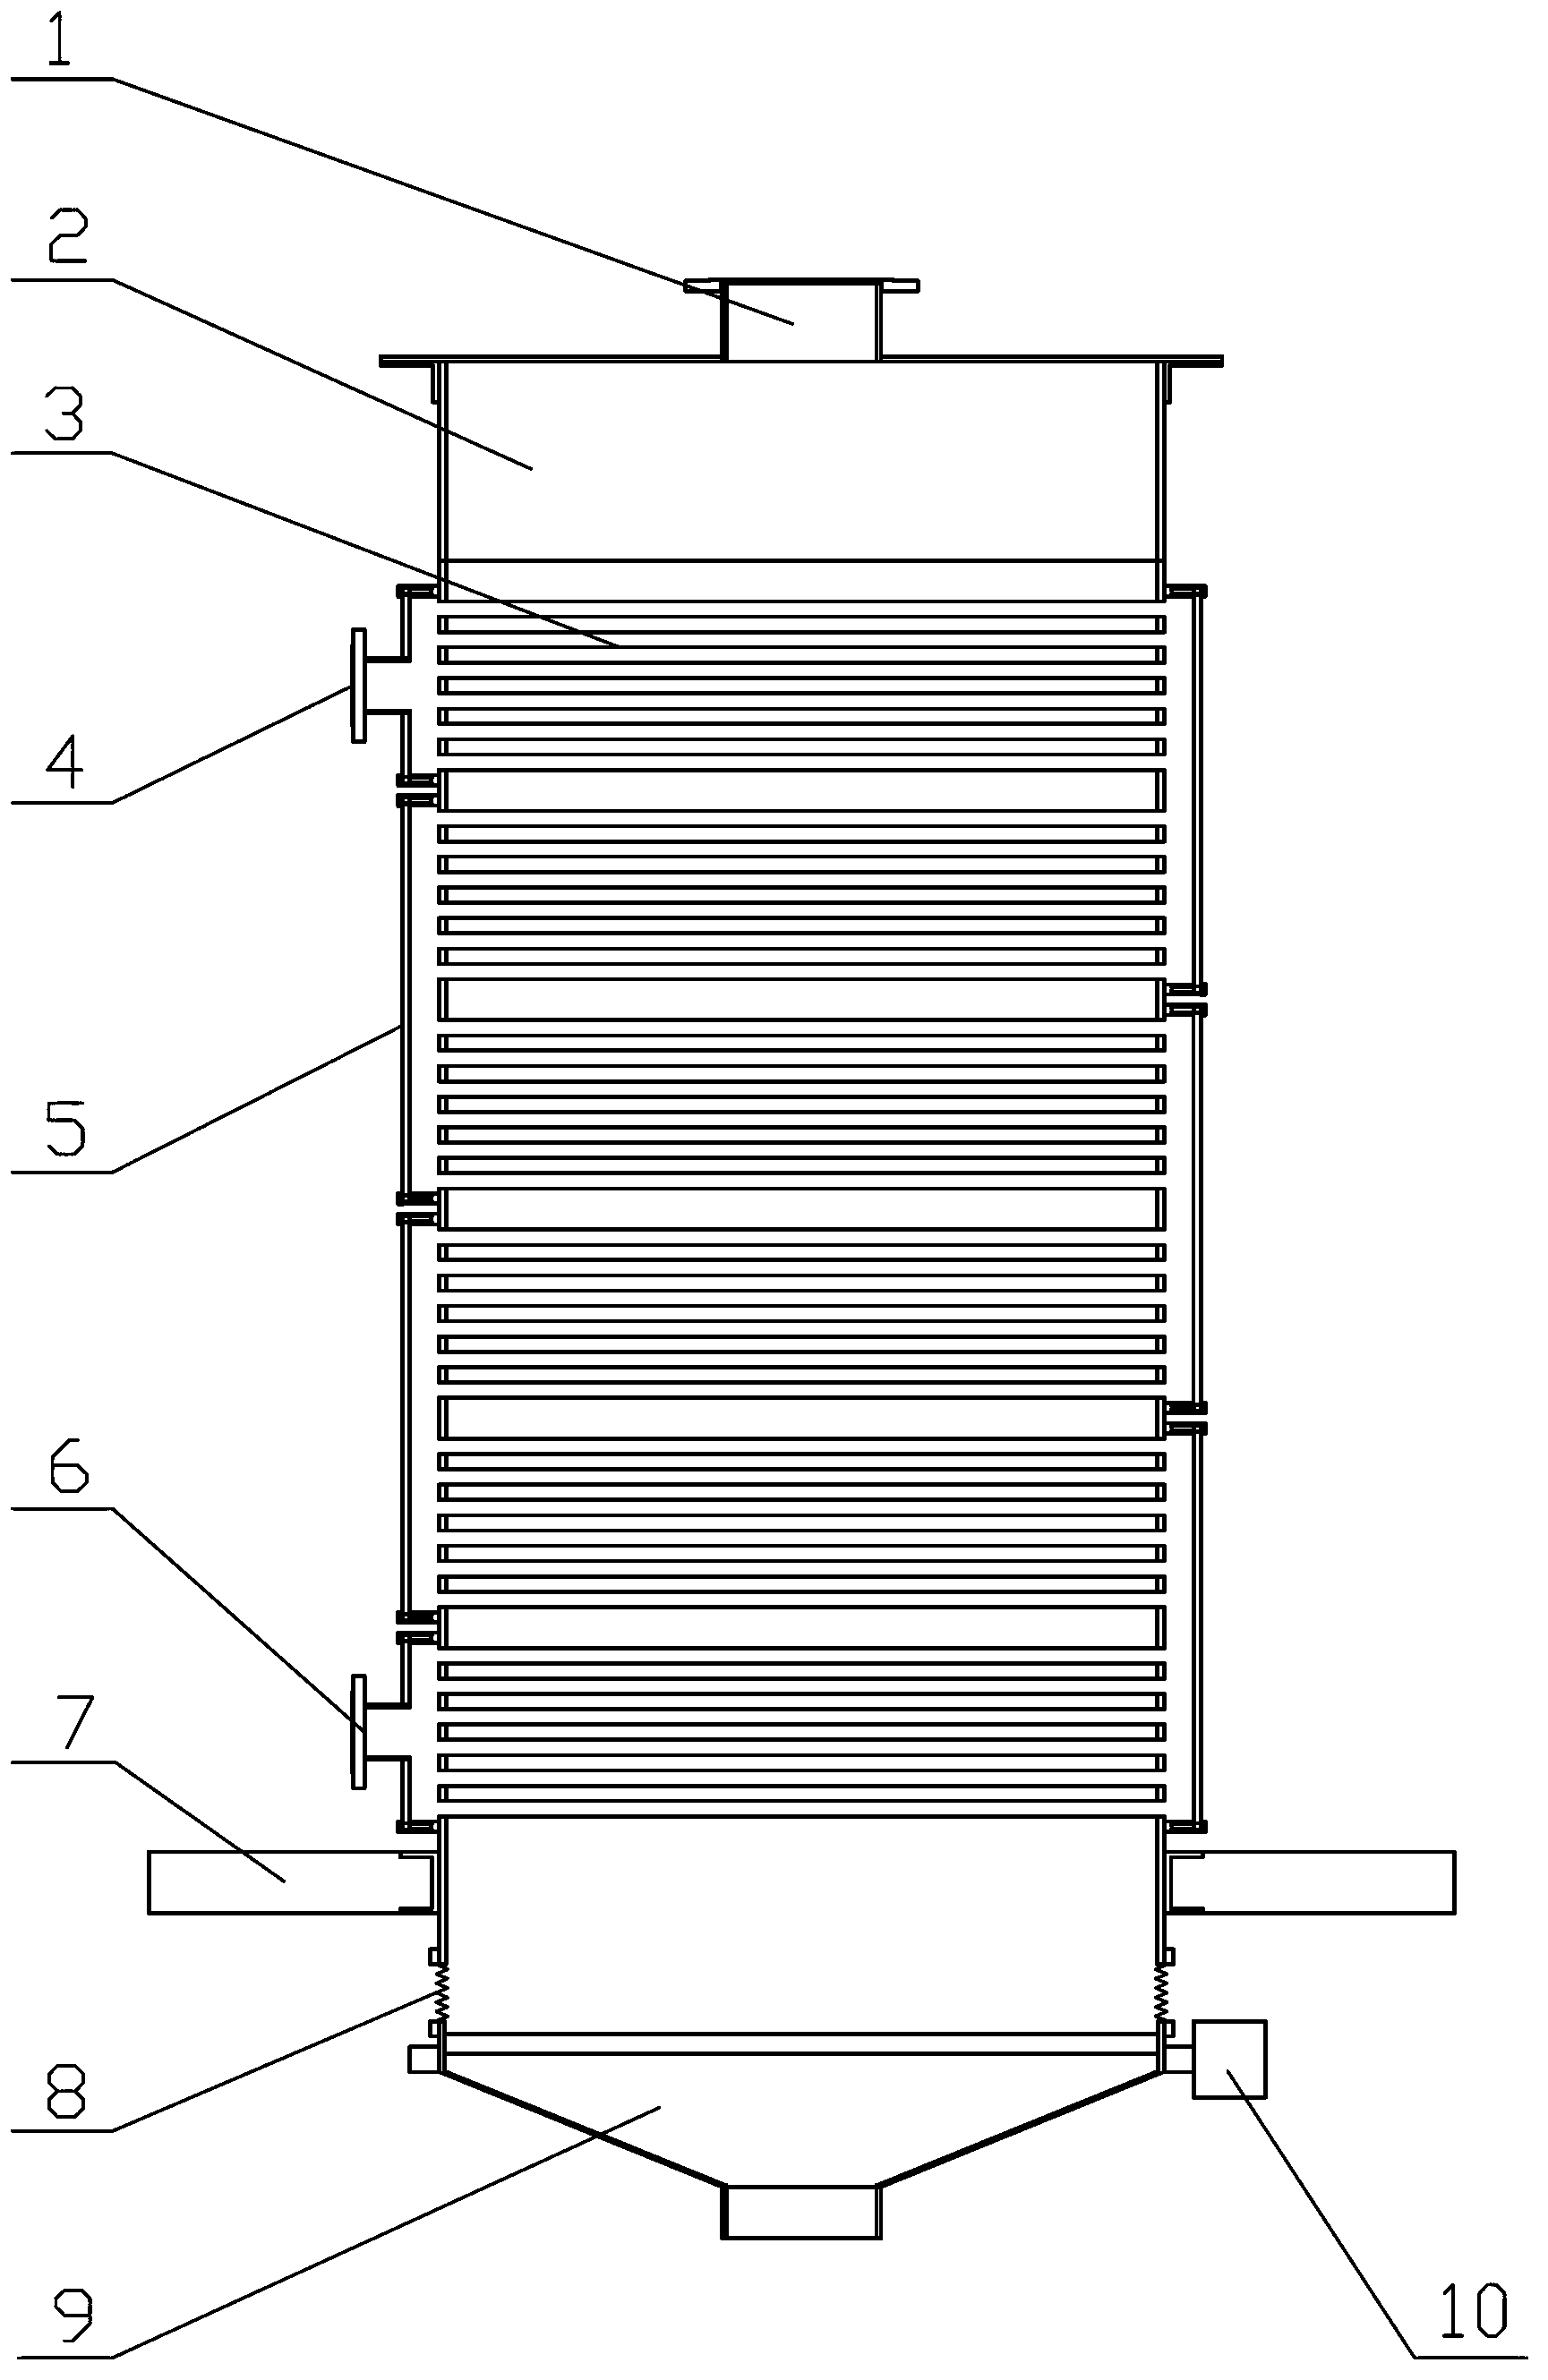 Tube nest type micro-powder heat exchanger